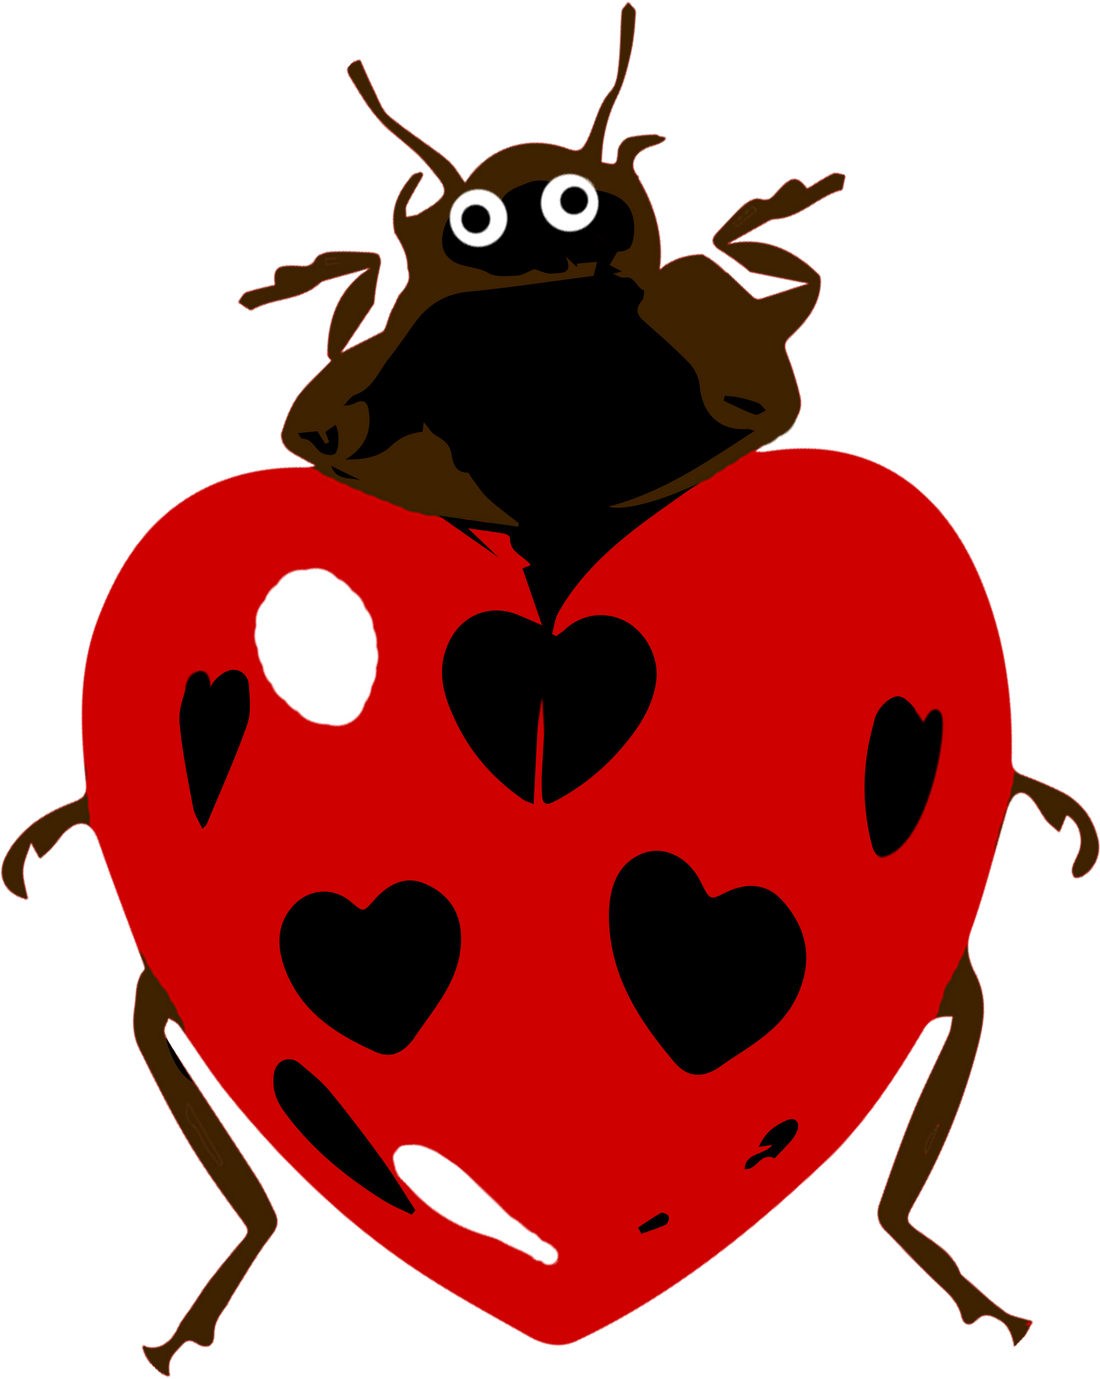 Lovebug